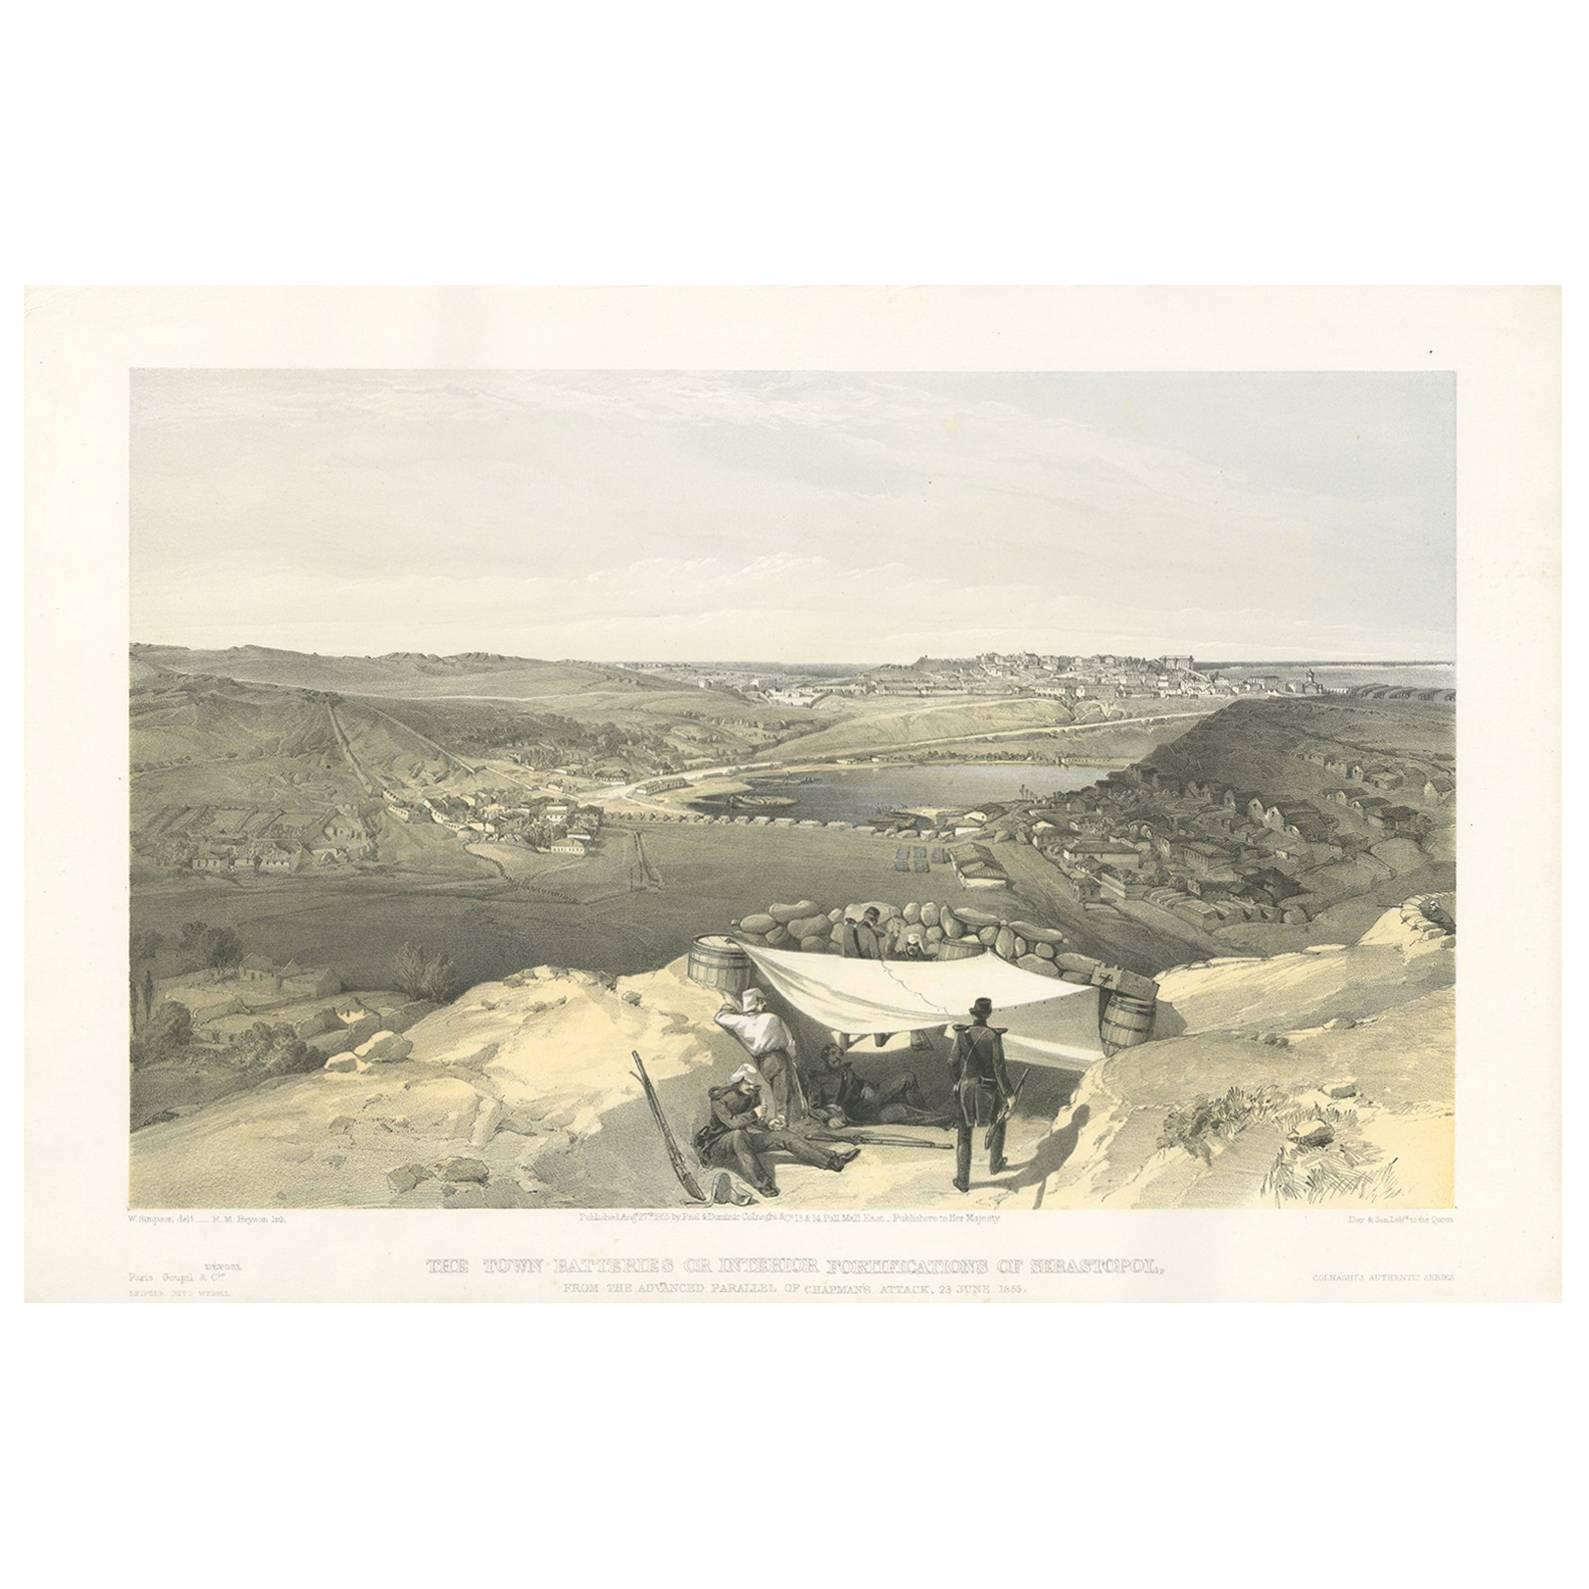 Antique Print with a View of Sebastopol ‘Crimean War’ by W. Simpson, 1855